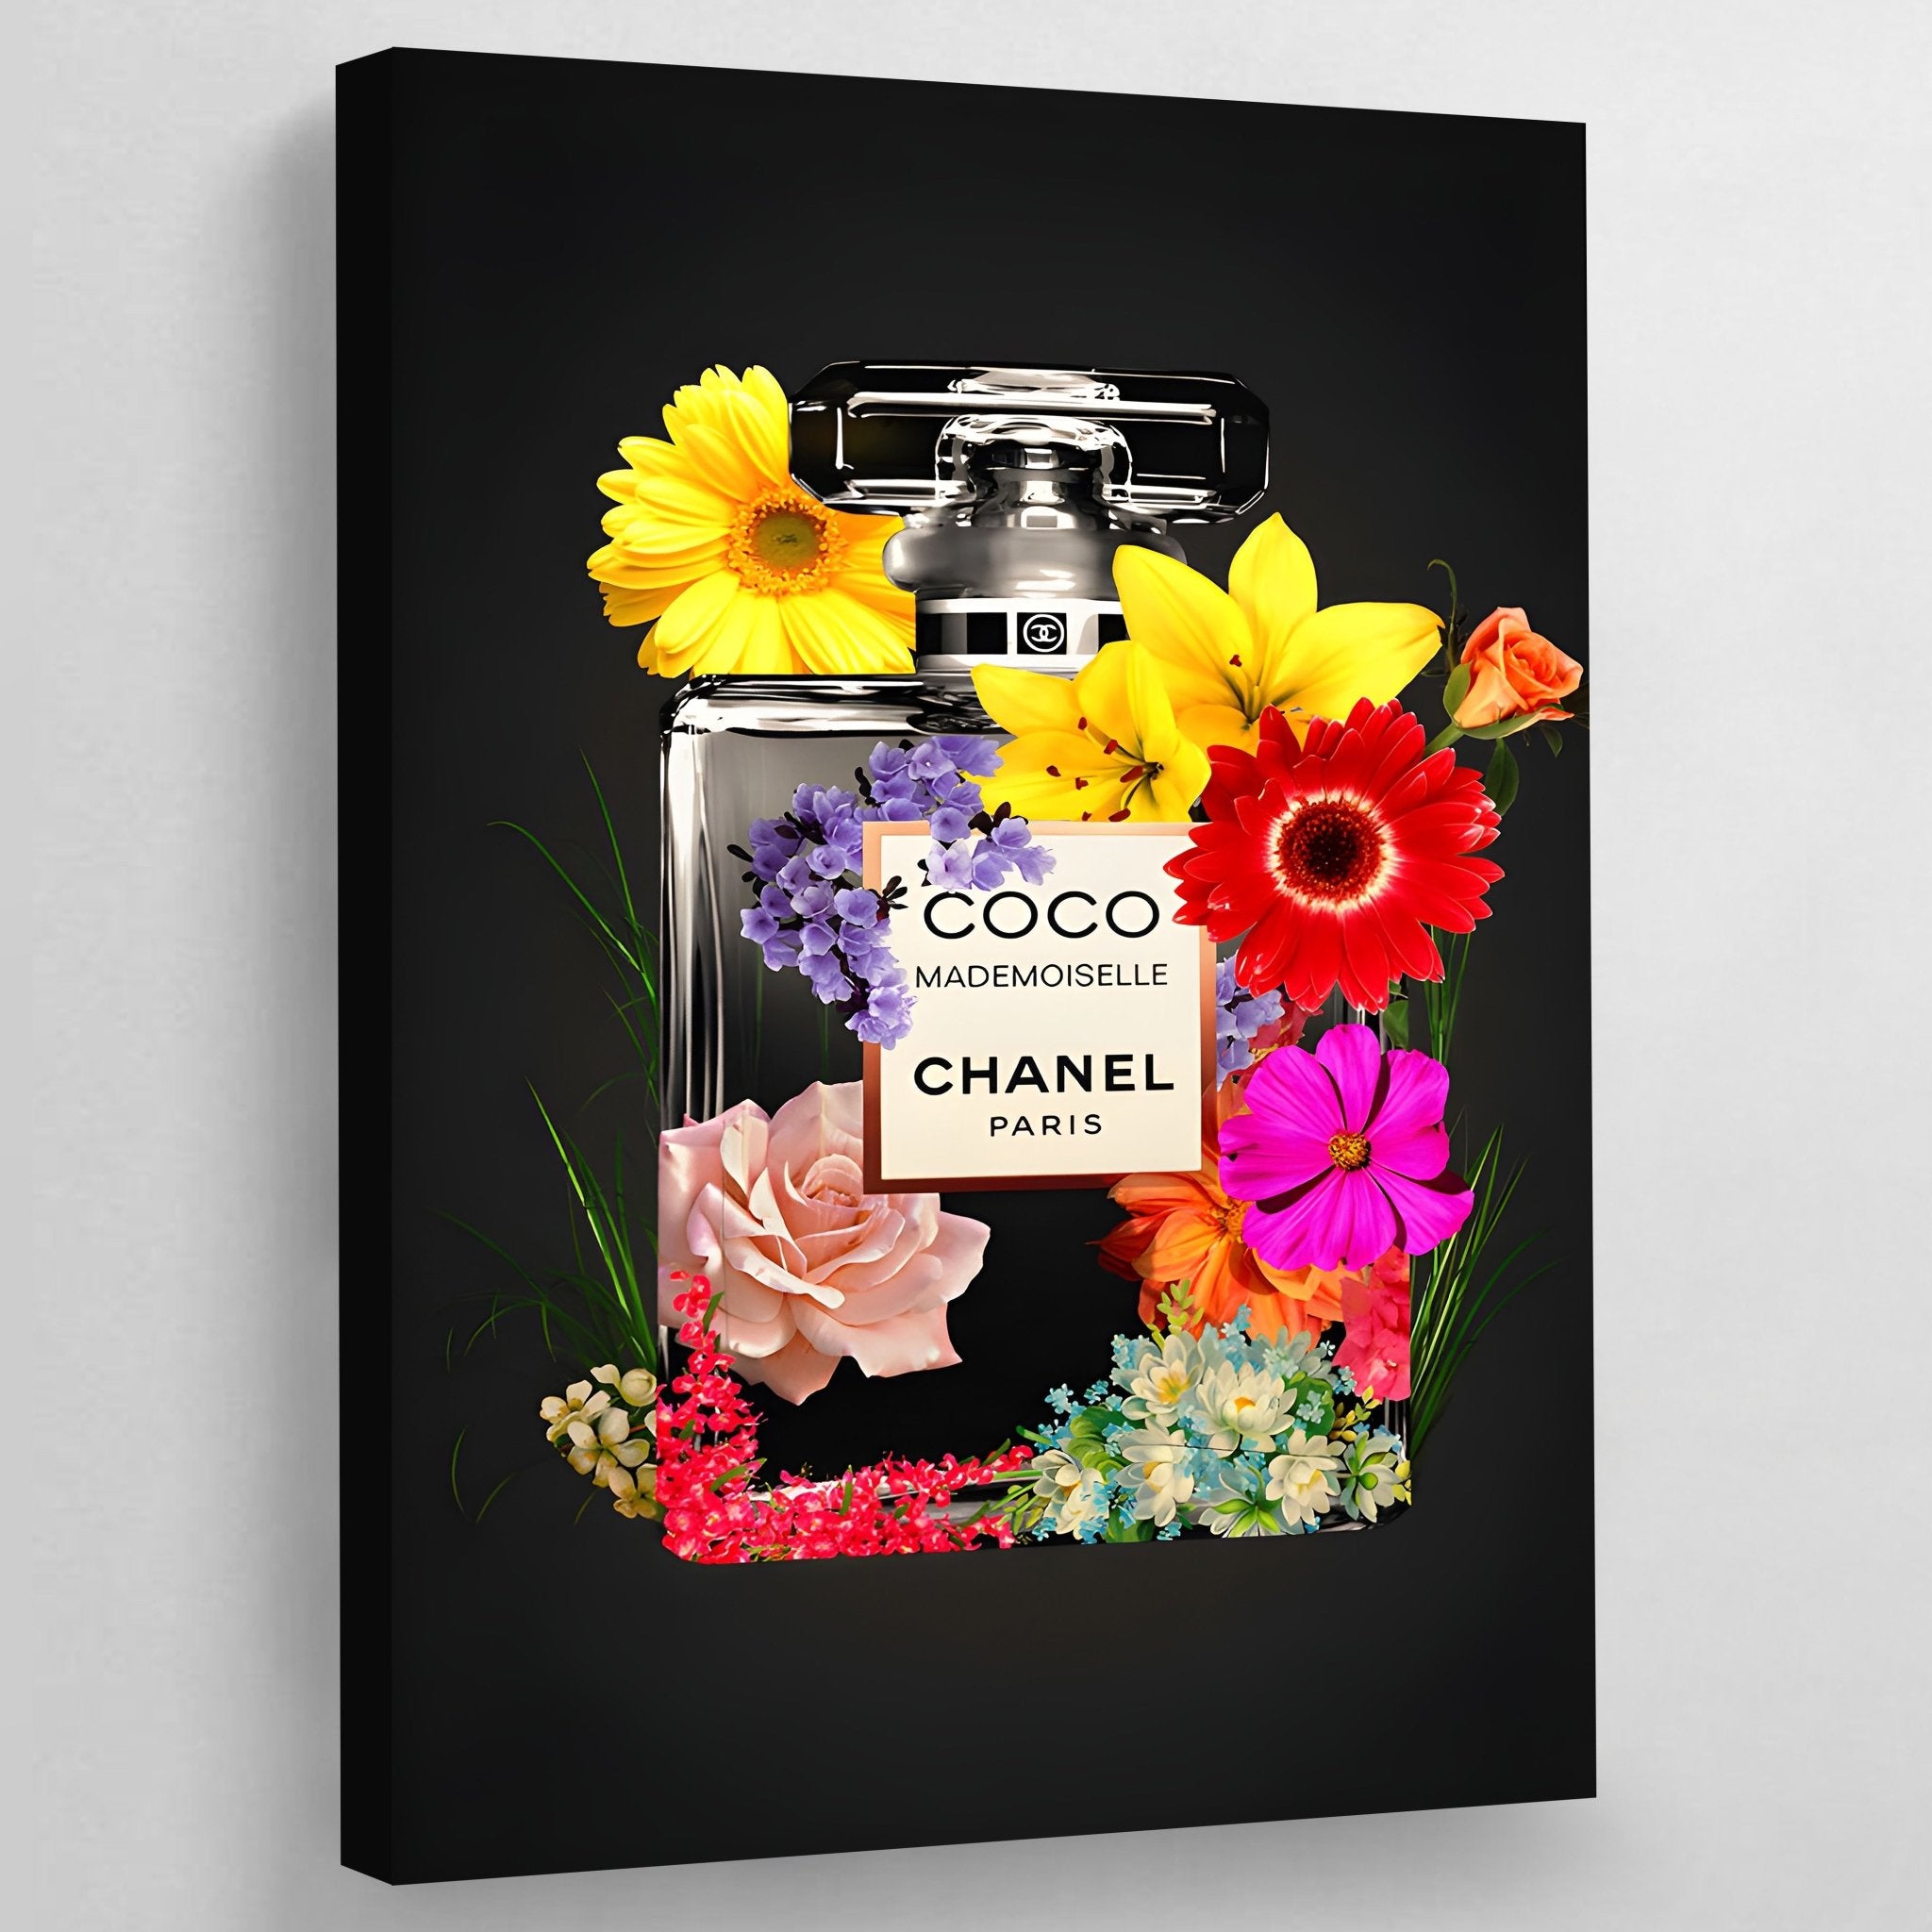 Chanel perfume vase wall art print Complete set of files Ready for printing  #watercolor #flower #chanelperfume #purplea…